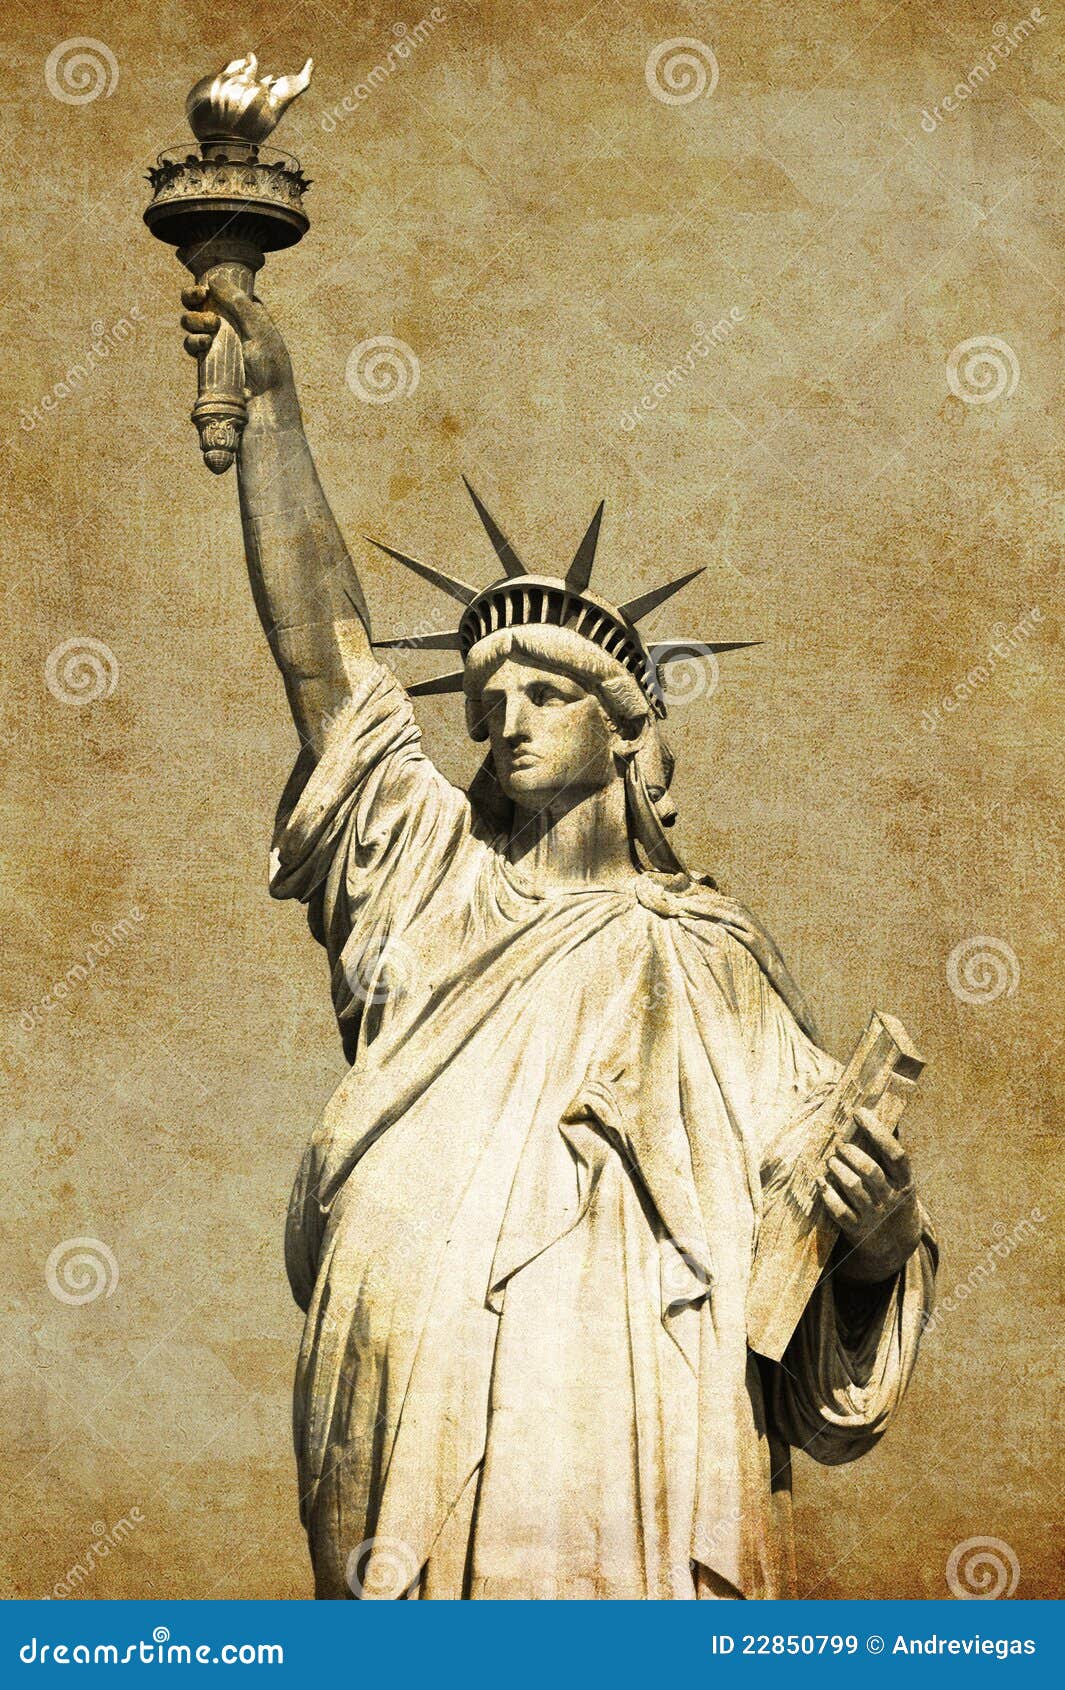 Statue of Liberty stock image. Image of postcard, sepia ...